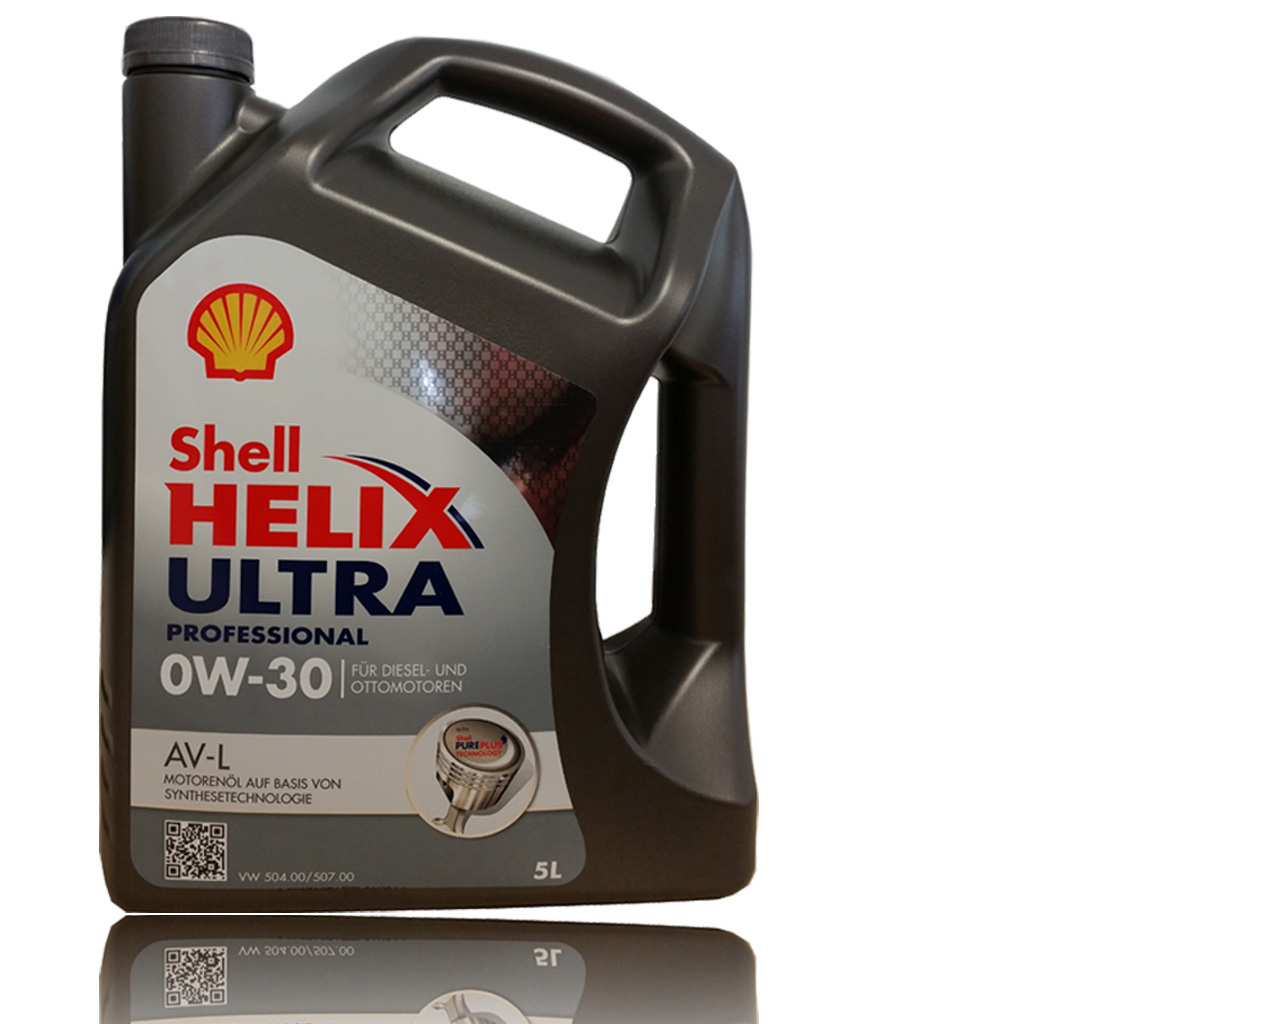 Купить масло 507 допуск. Helix Ultra professional av-l 0w-30. Shell Helix Ultra 0w-30 504/507. Shell Helix Ultra av 0w-30. VW 504.00/507.00 Shell.